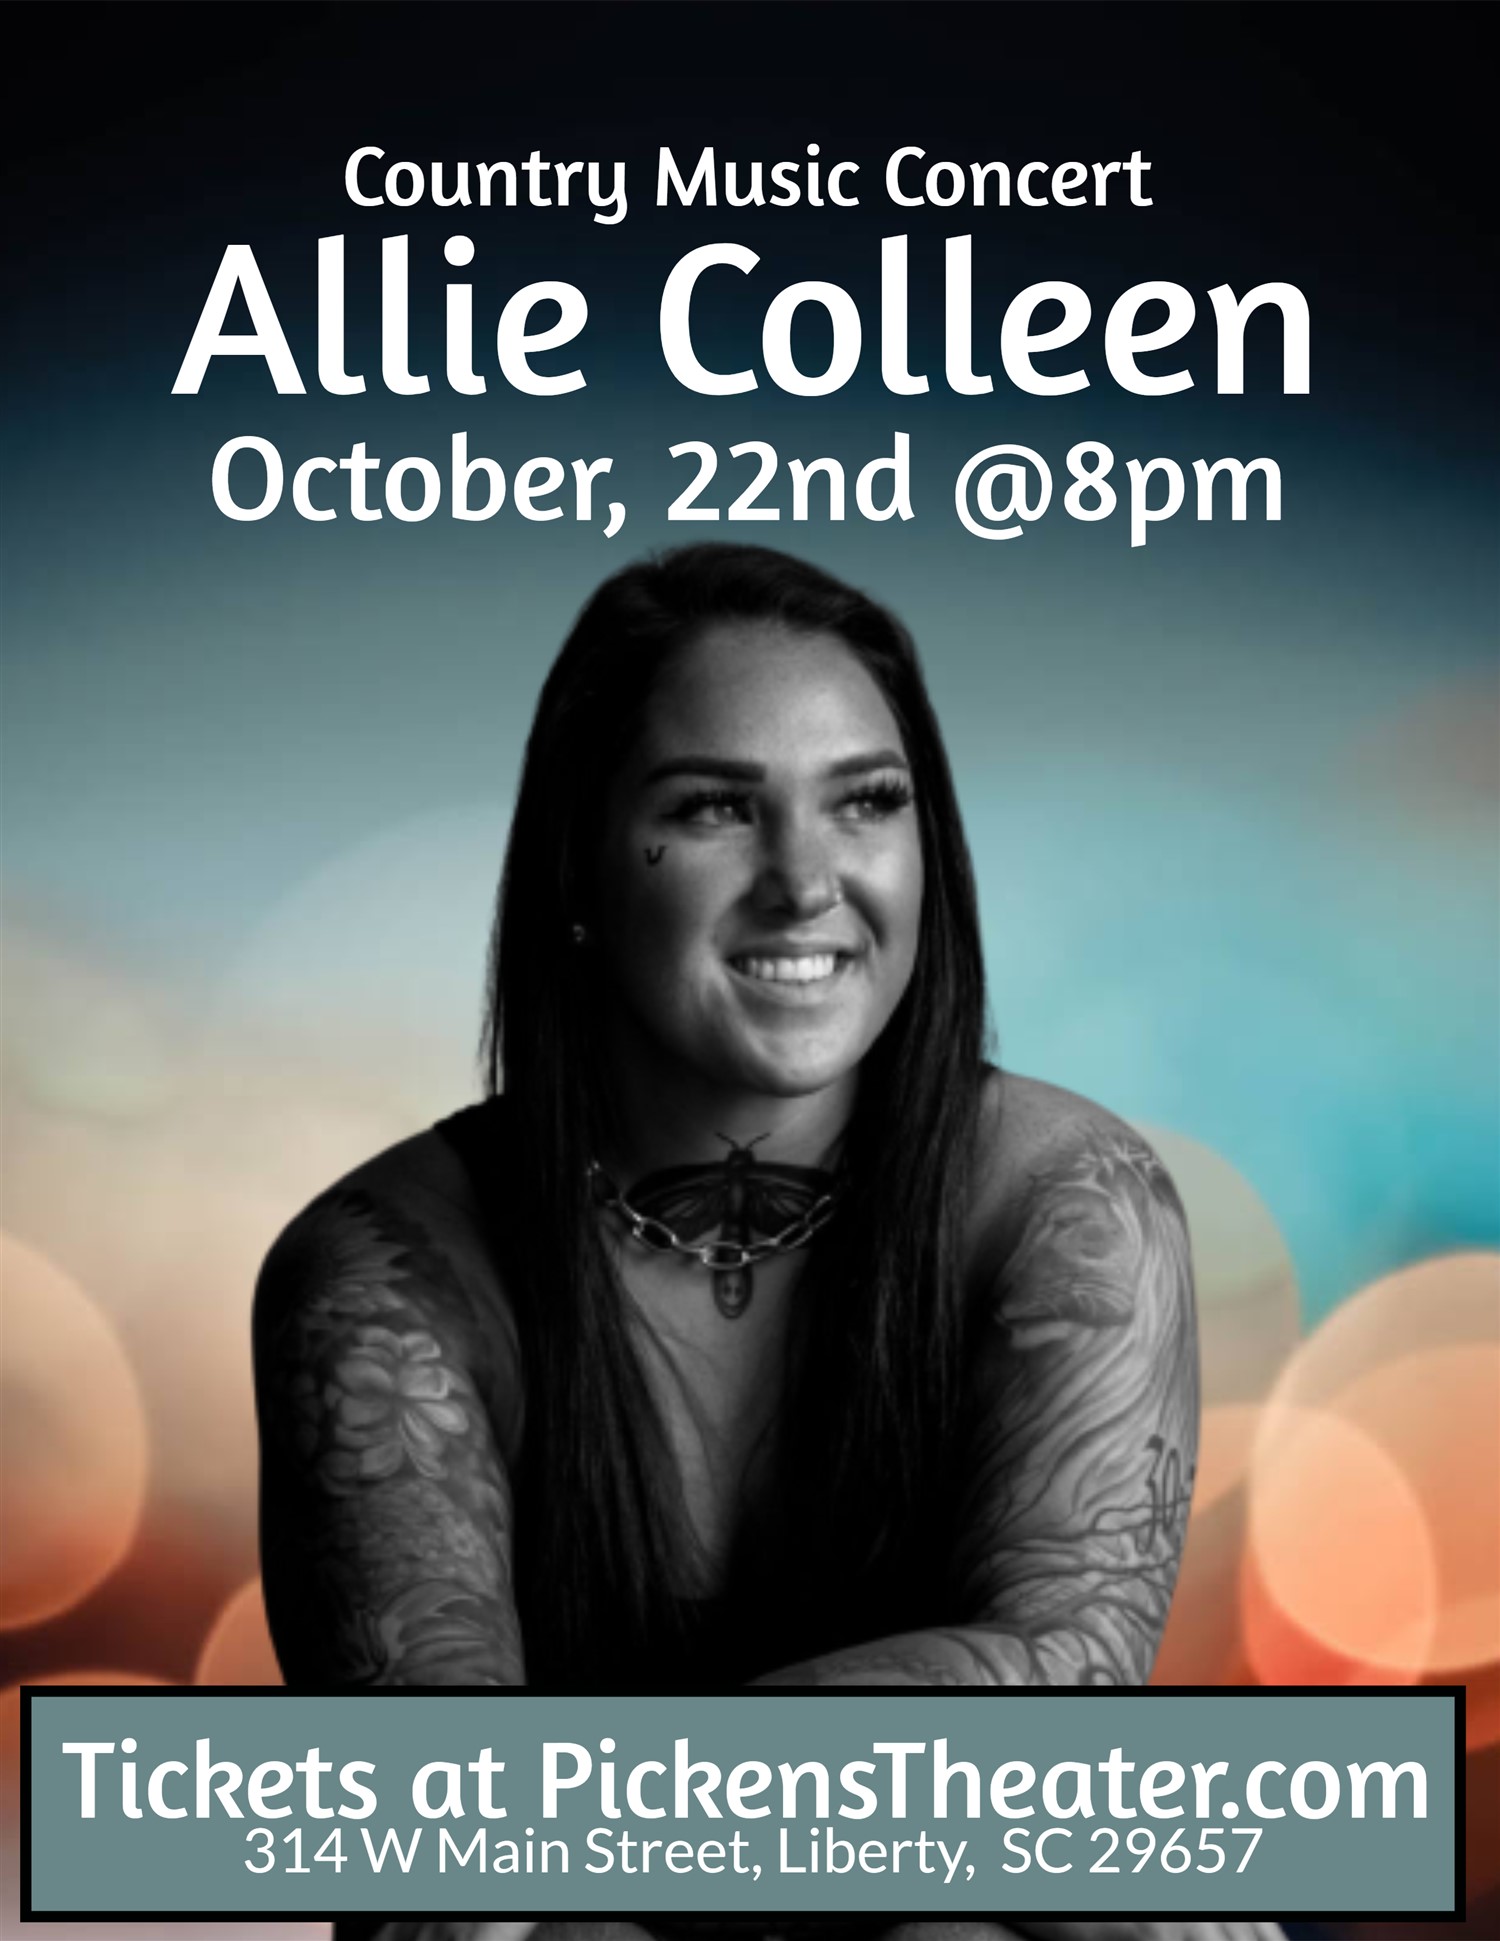 Allie Colleen LIVE! Country Music Concert on Oct 22, 20:00@Pickens County Performing Arts Center - Compra entradas y obtén información enPickens County Performing Arts Center pickenscountyperformingartscenter.org